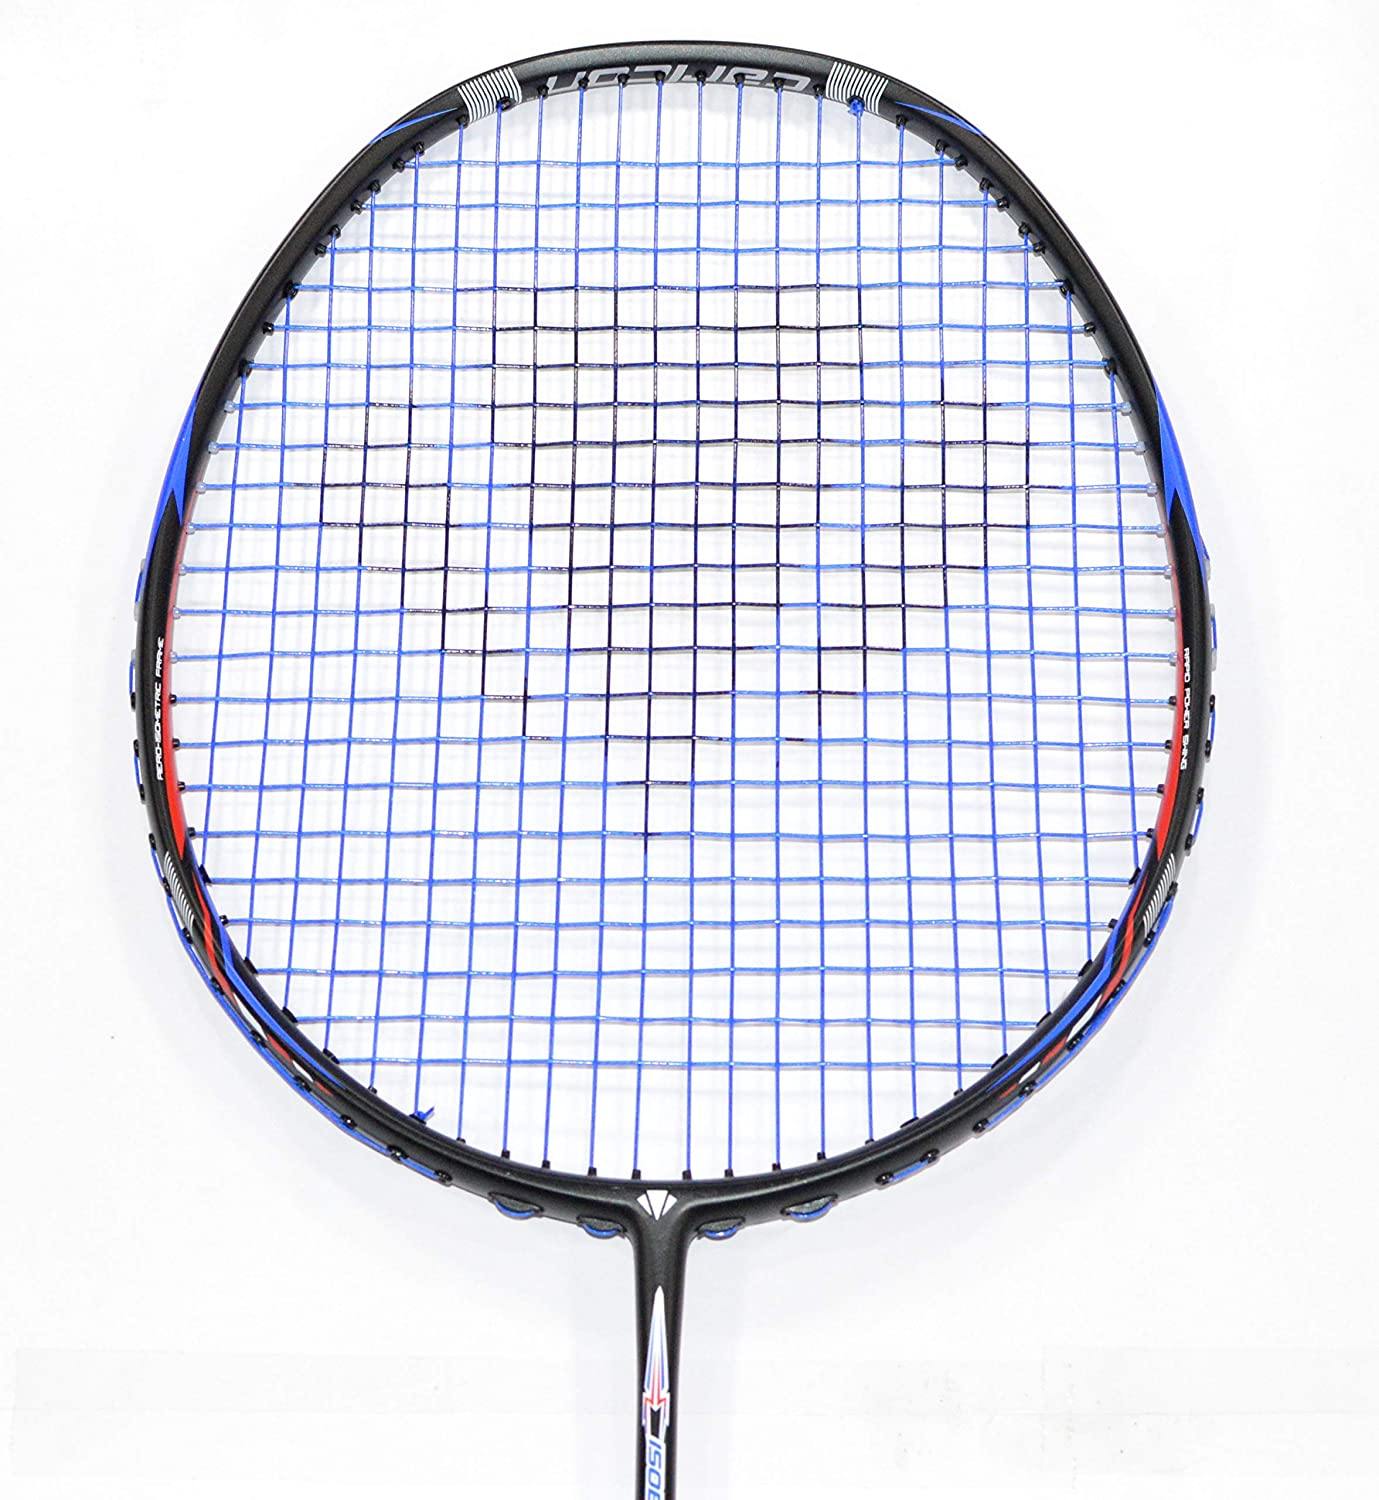 Carlton Isoblade EP20 Badminton Racket - Best Price online Prokicksports.com